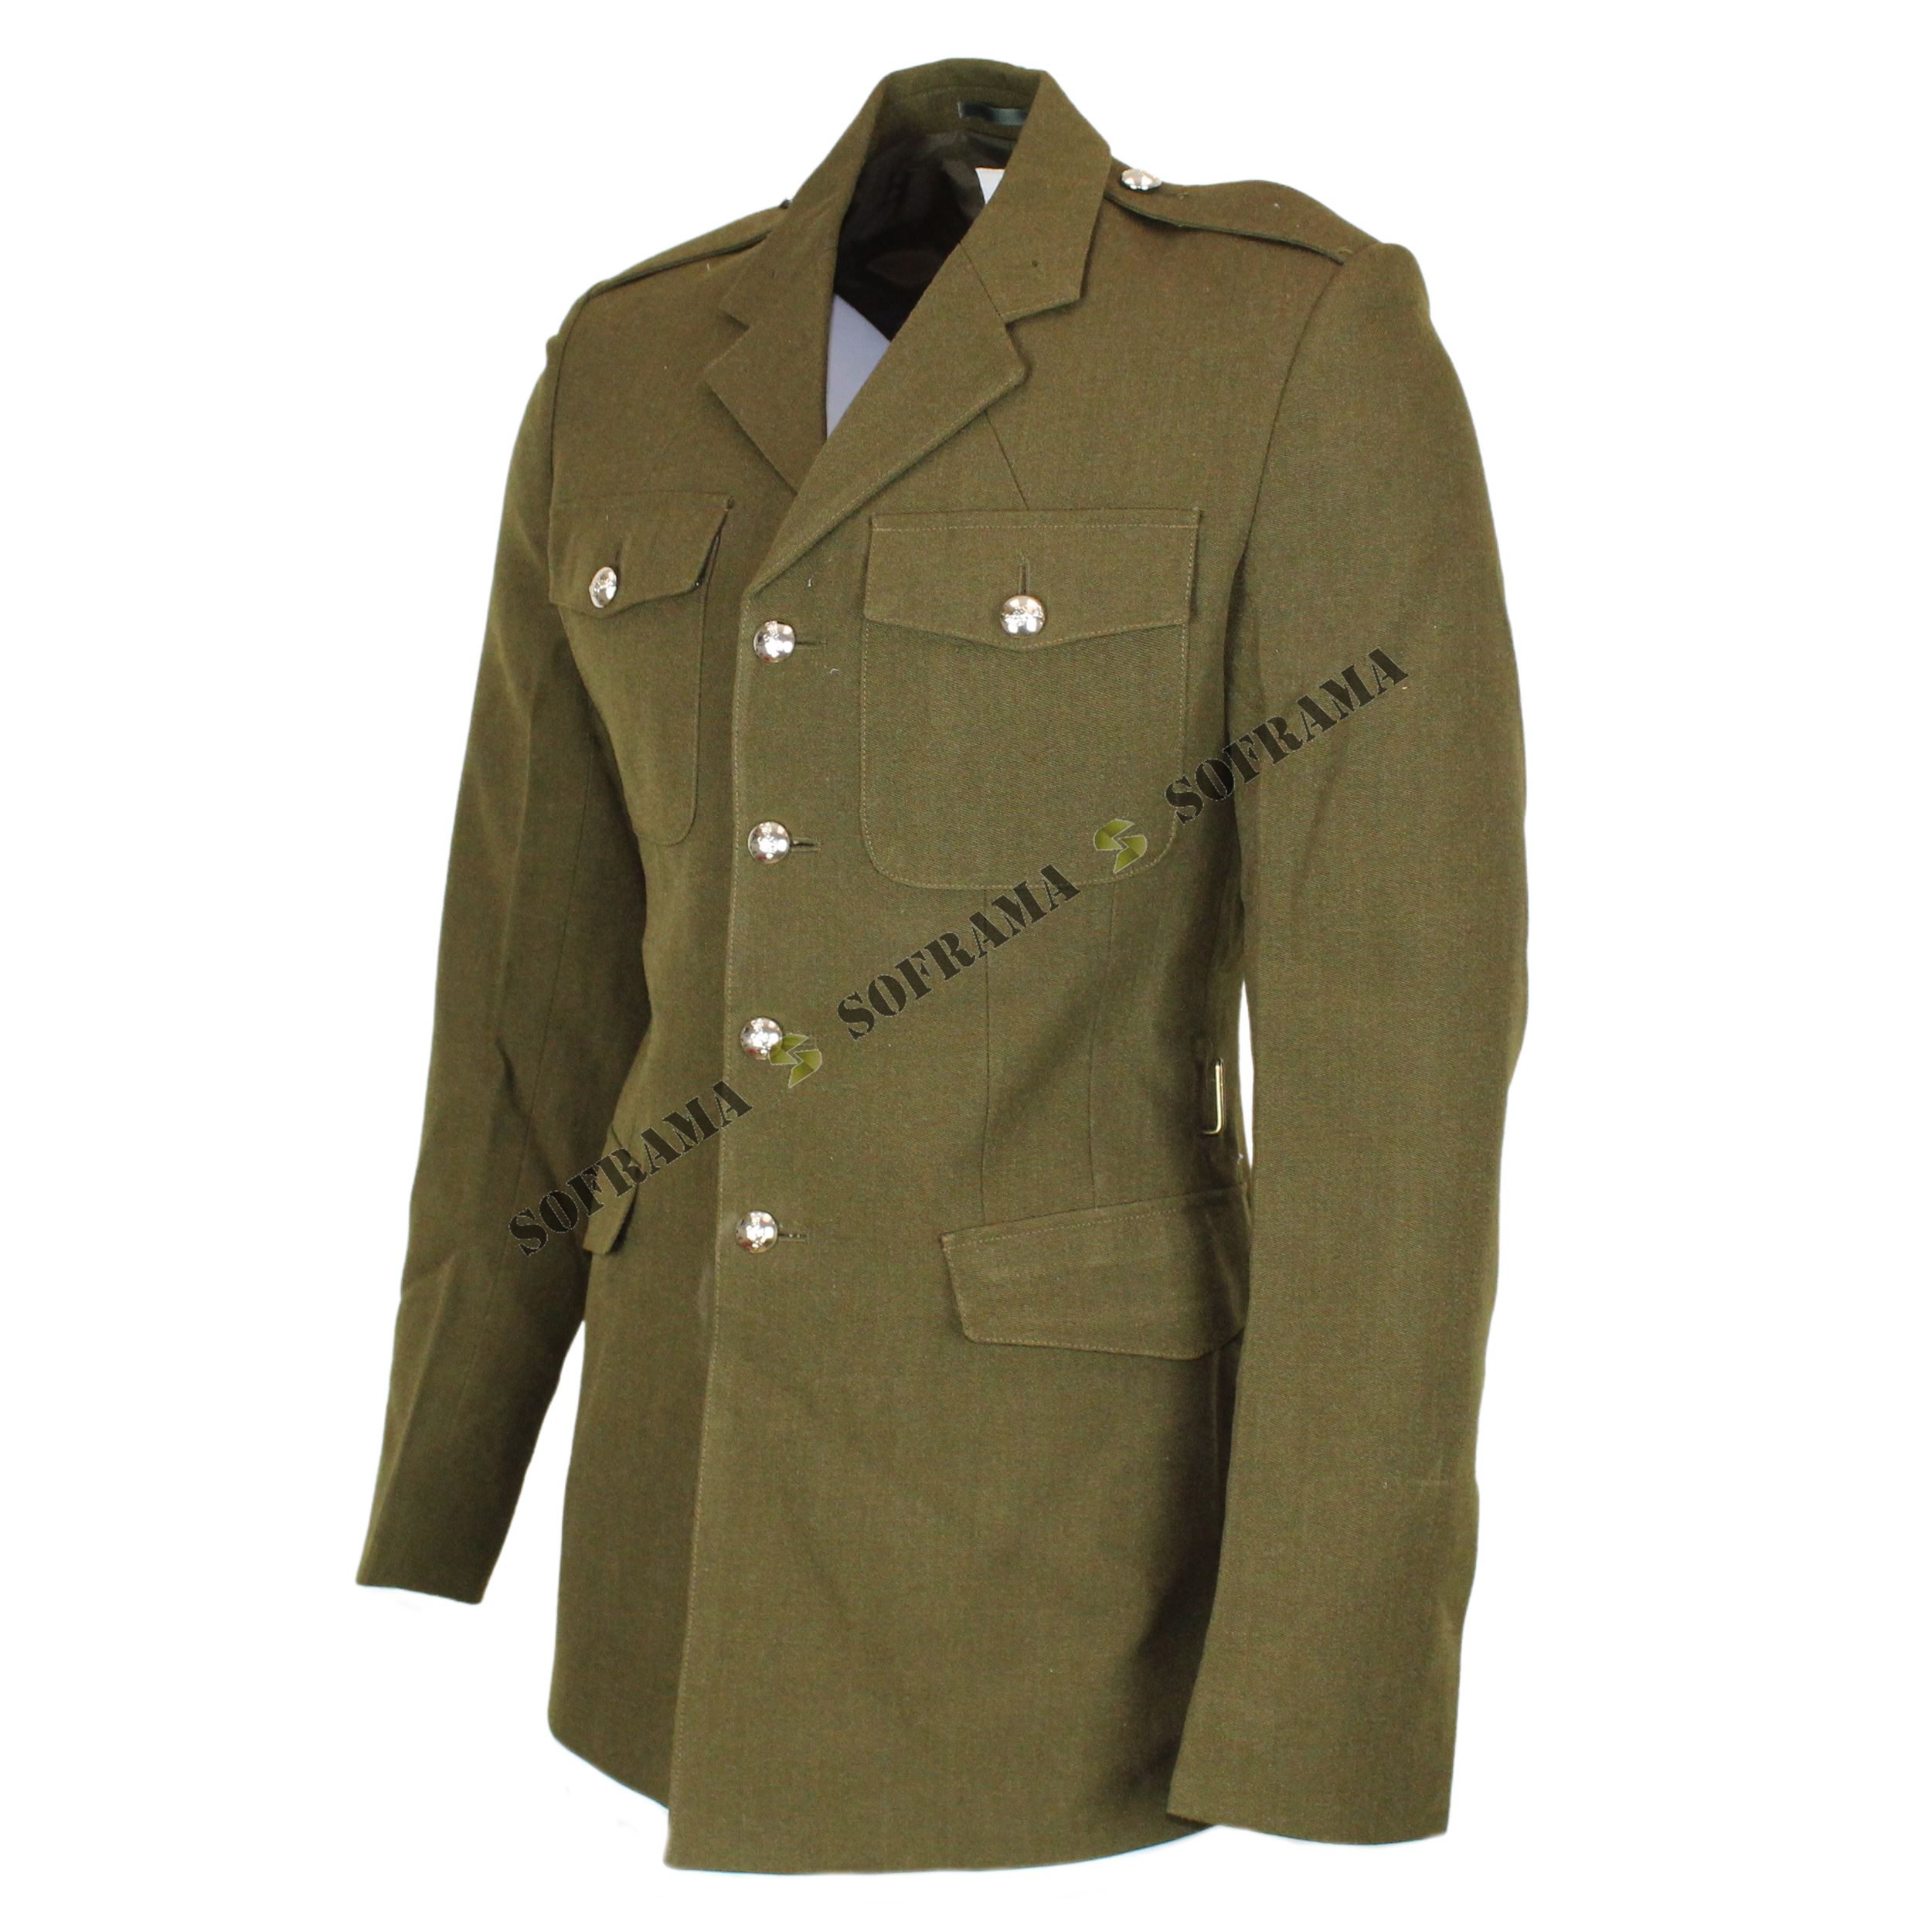 British army green jacket - Soframa